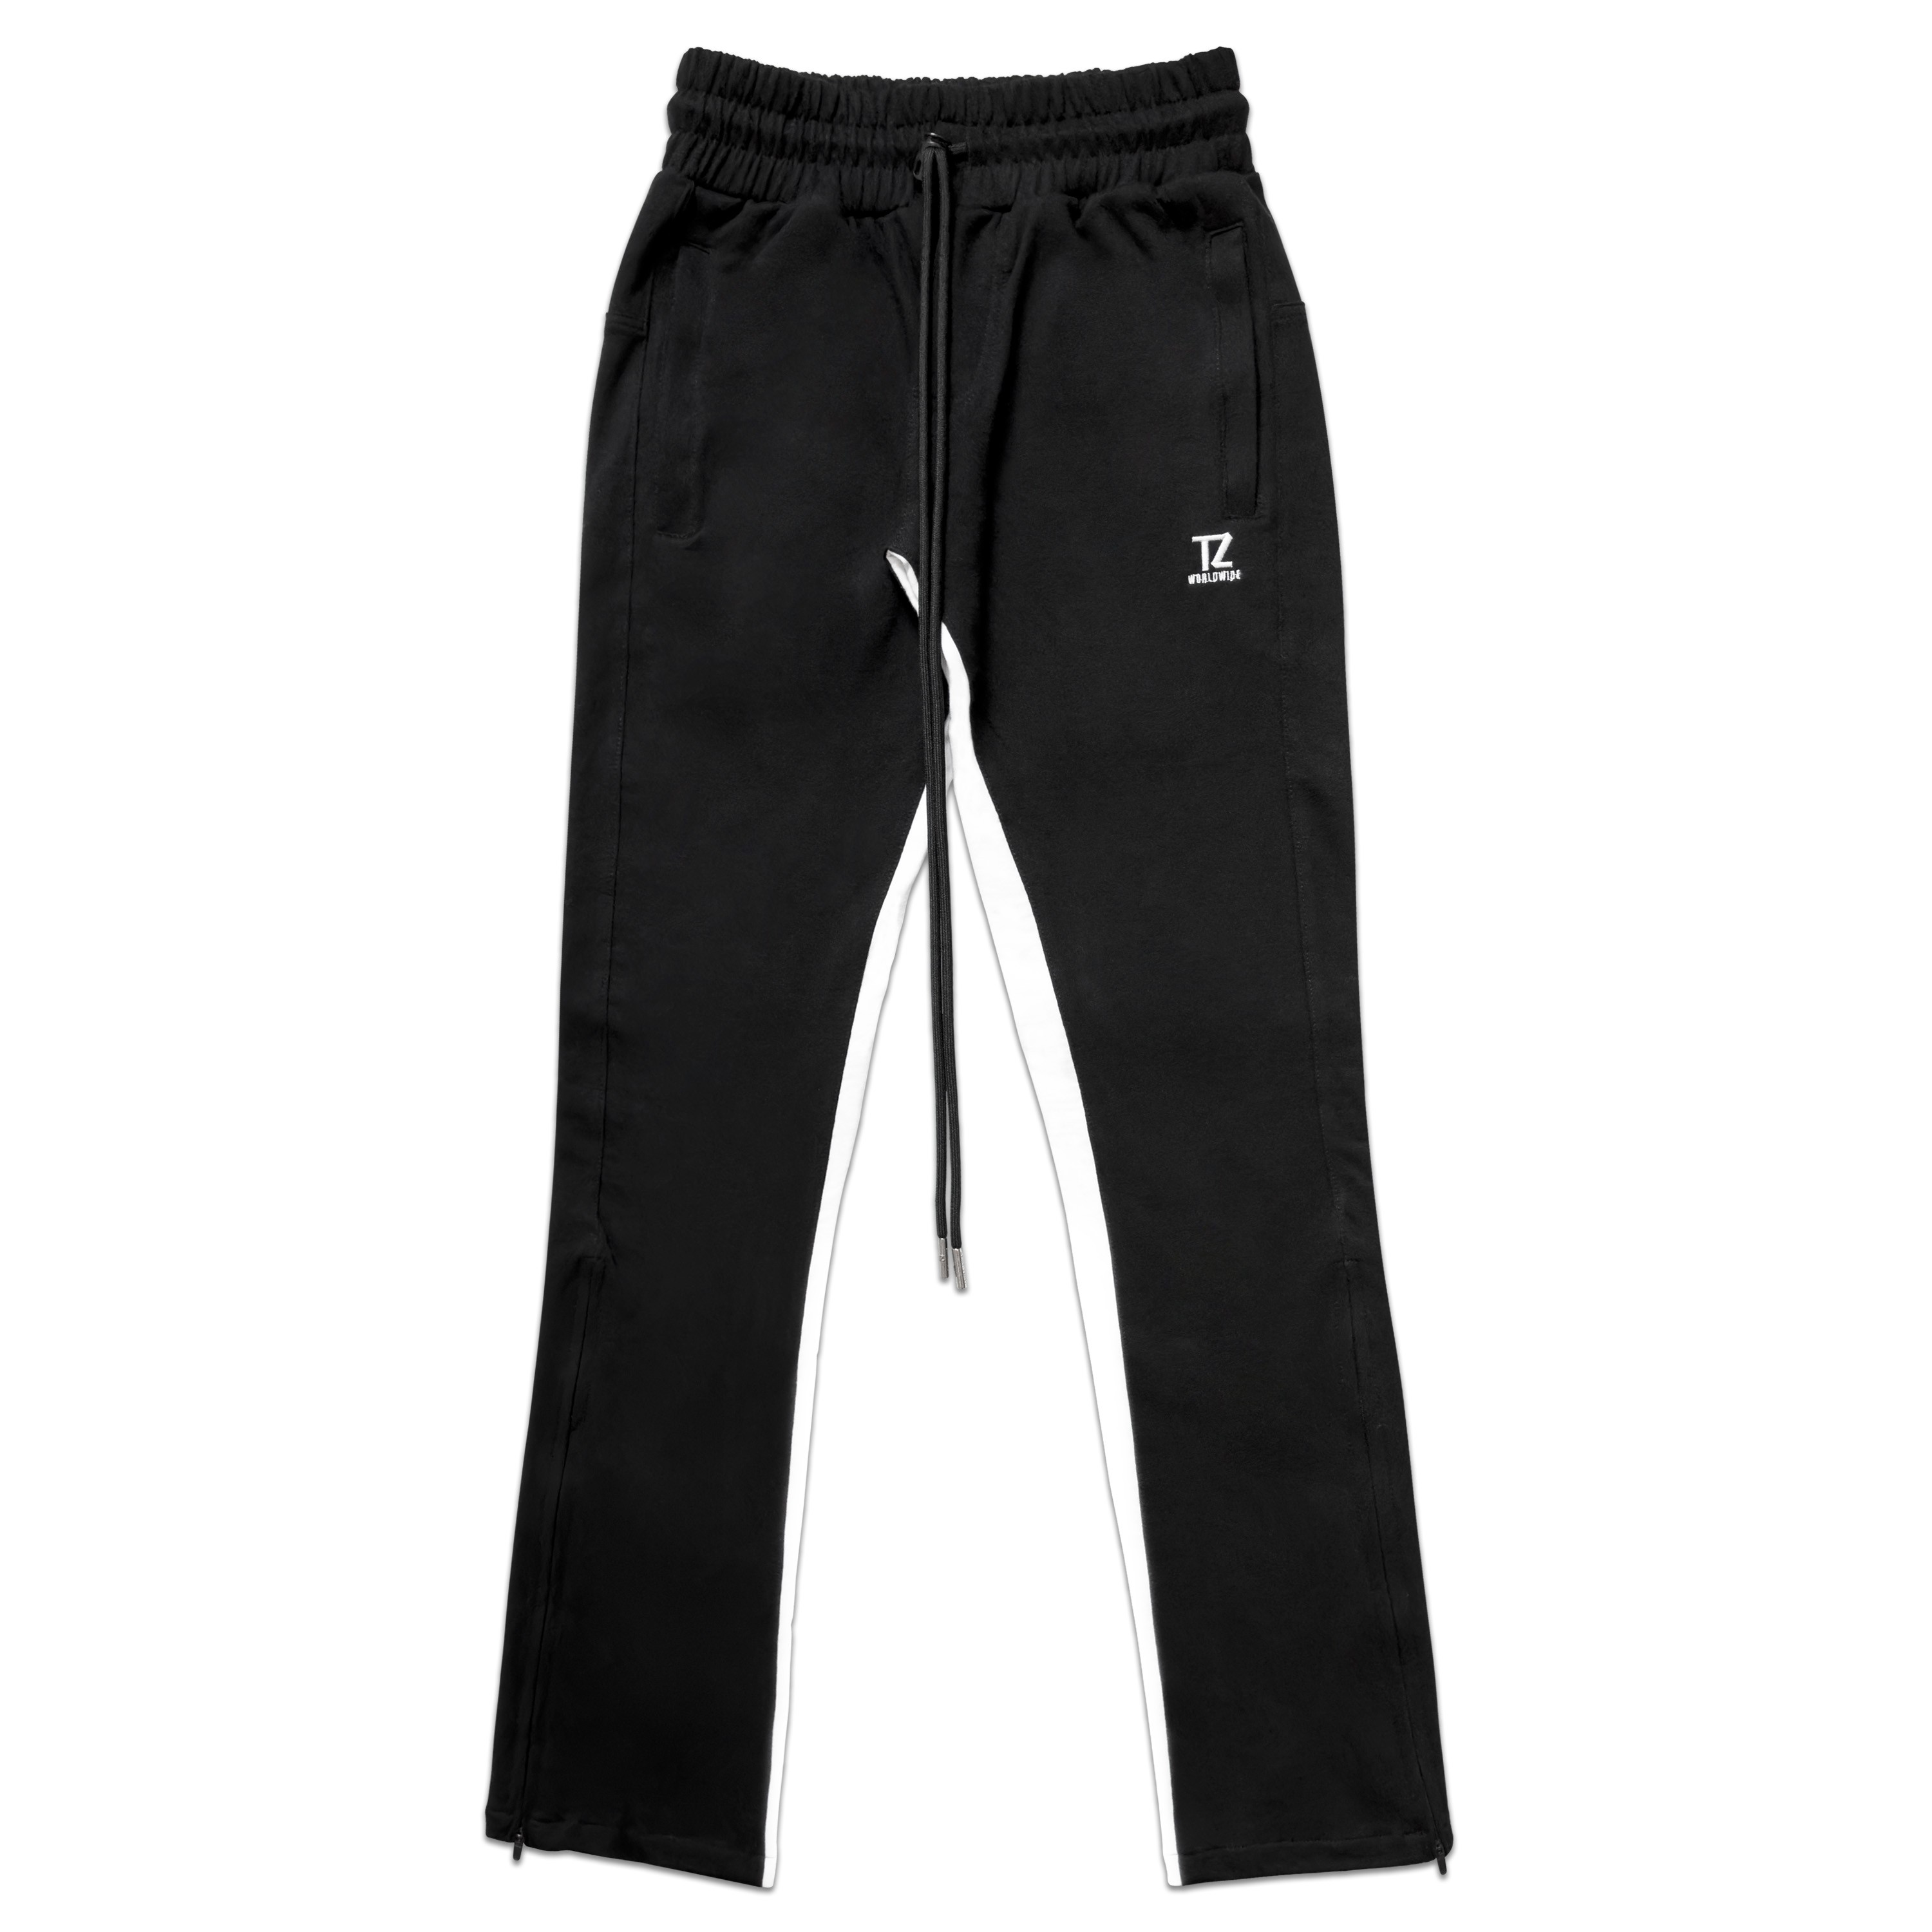 TZ Sweater Pants (Slim Fit Bootcut) Size L